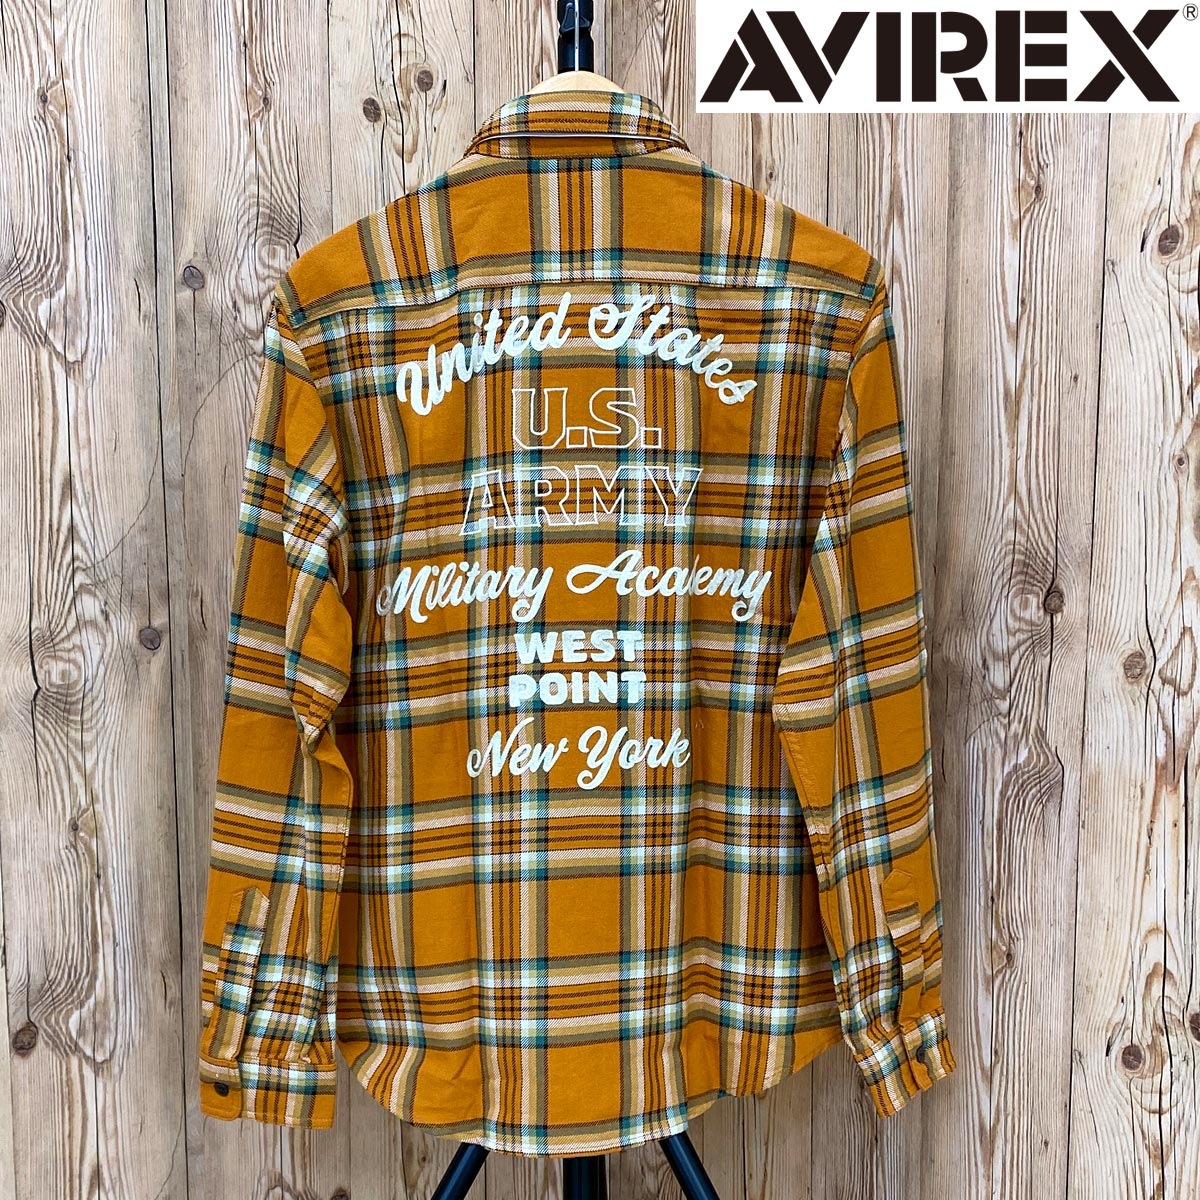 AVIREX アヴィレックス CHECK EMBROIDERED SHIRT チェックシャツ エンブ...